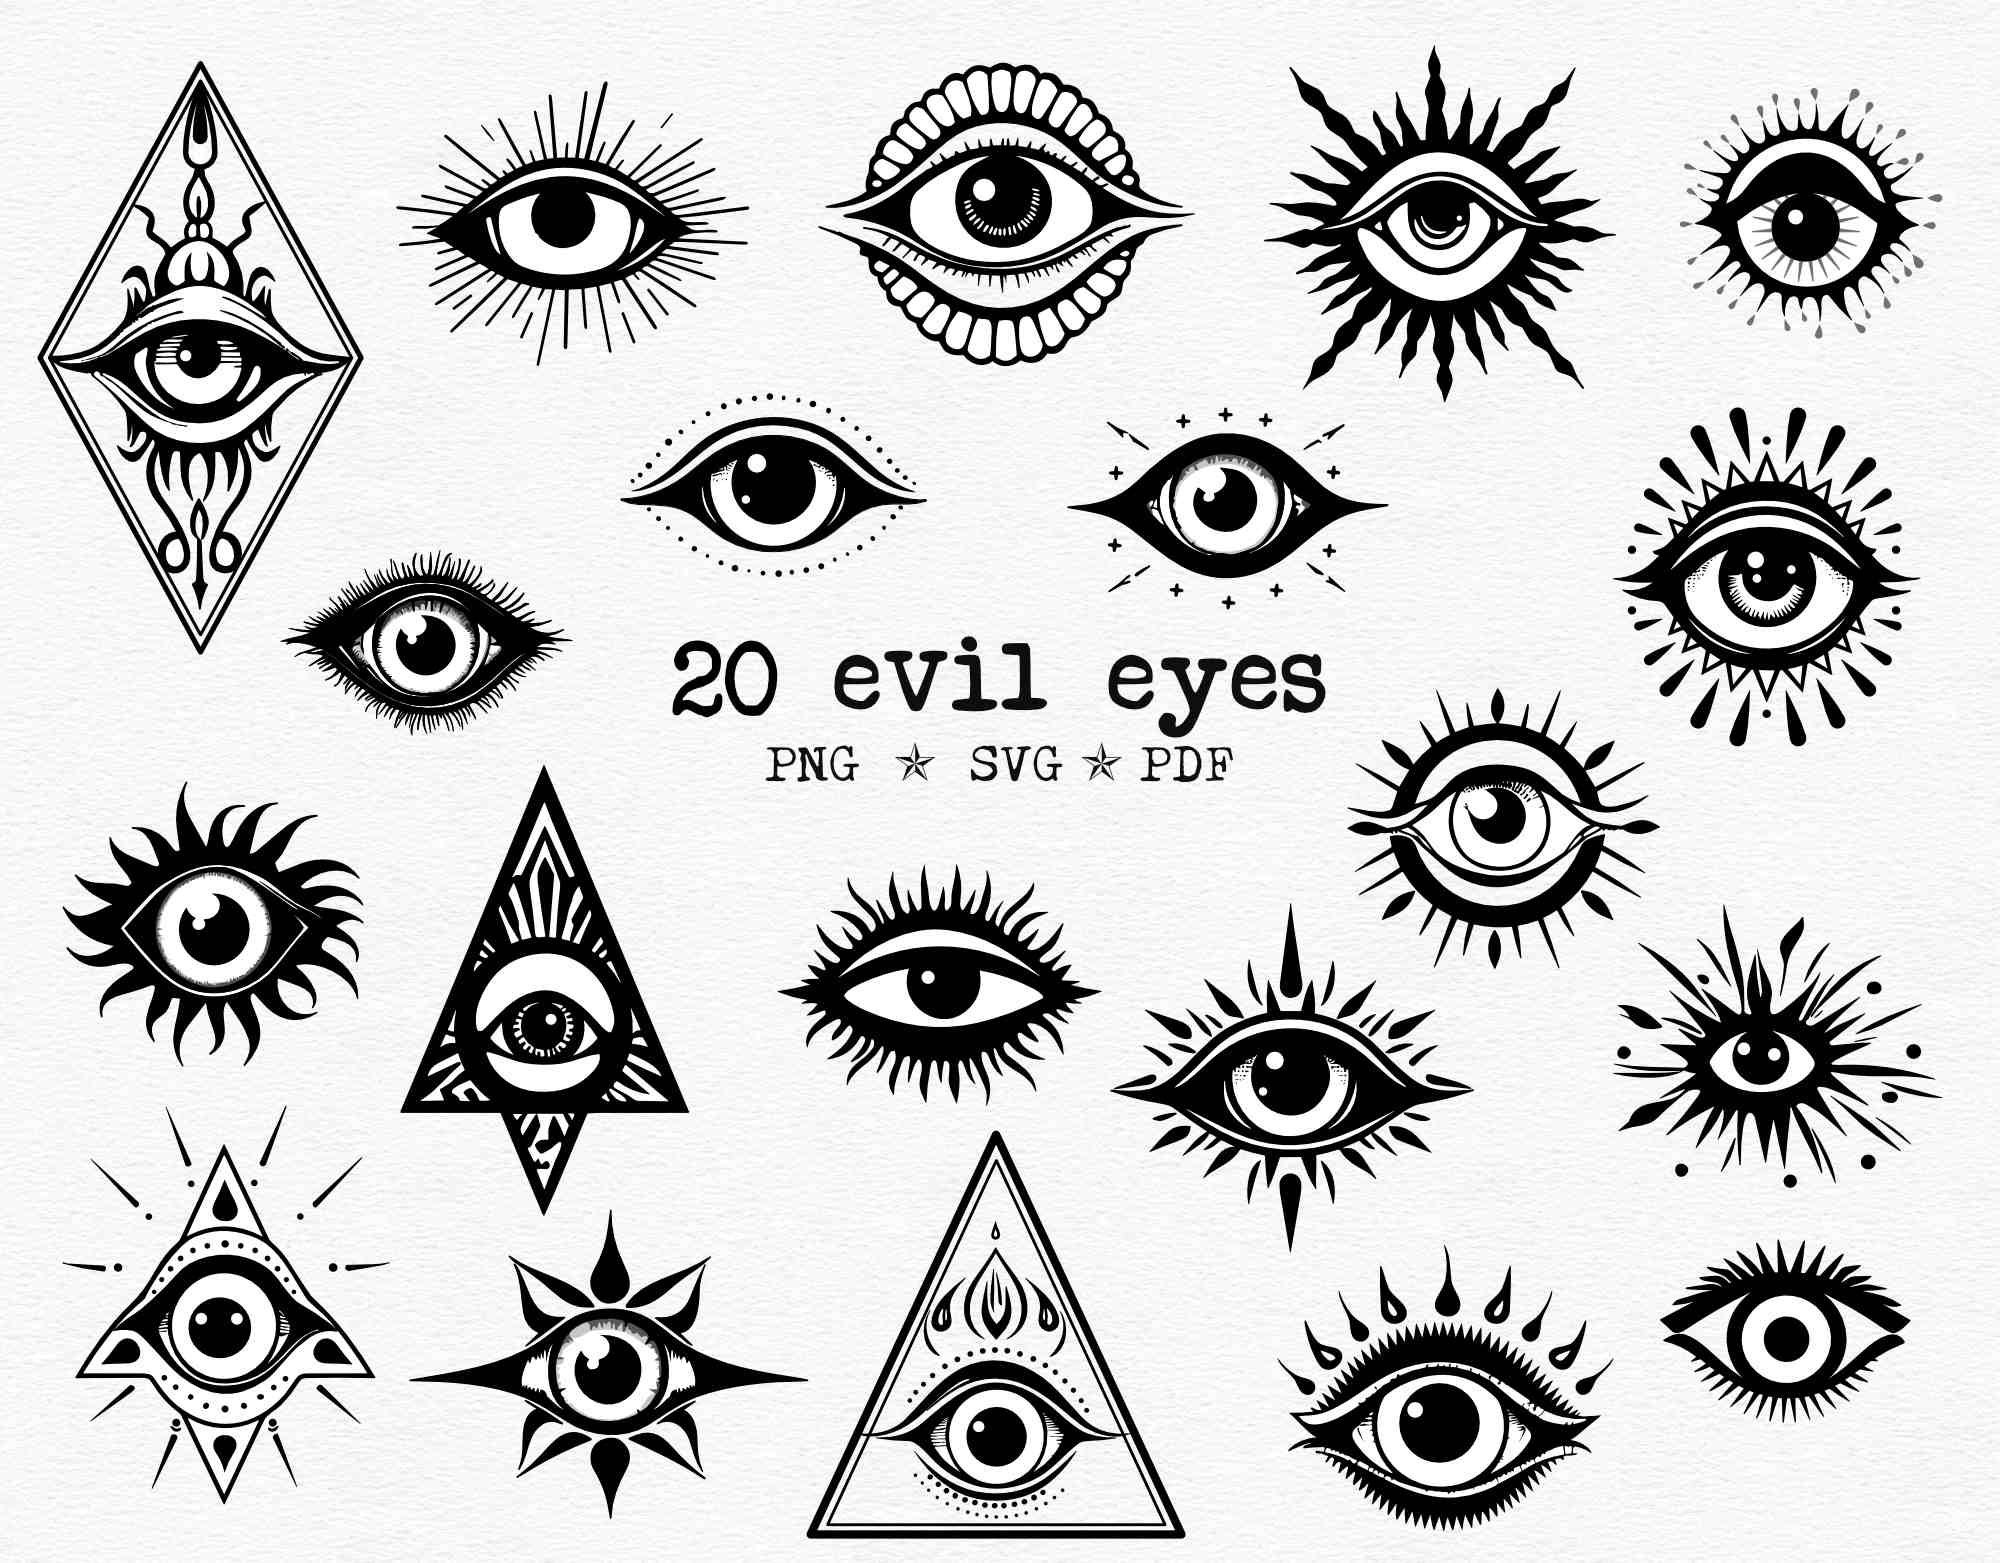 Top 30 Meaningful Evil Eye Tattoo Design Ideas (2021 Updated) - Saved Tattoo  | Evil eye tattoo, Eye tattoo, Evil eye design